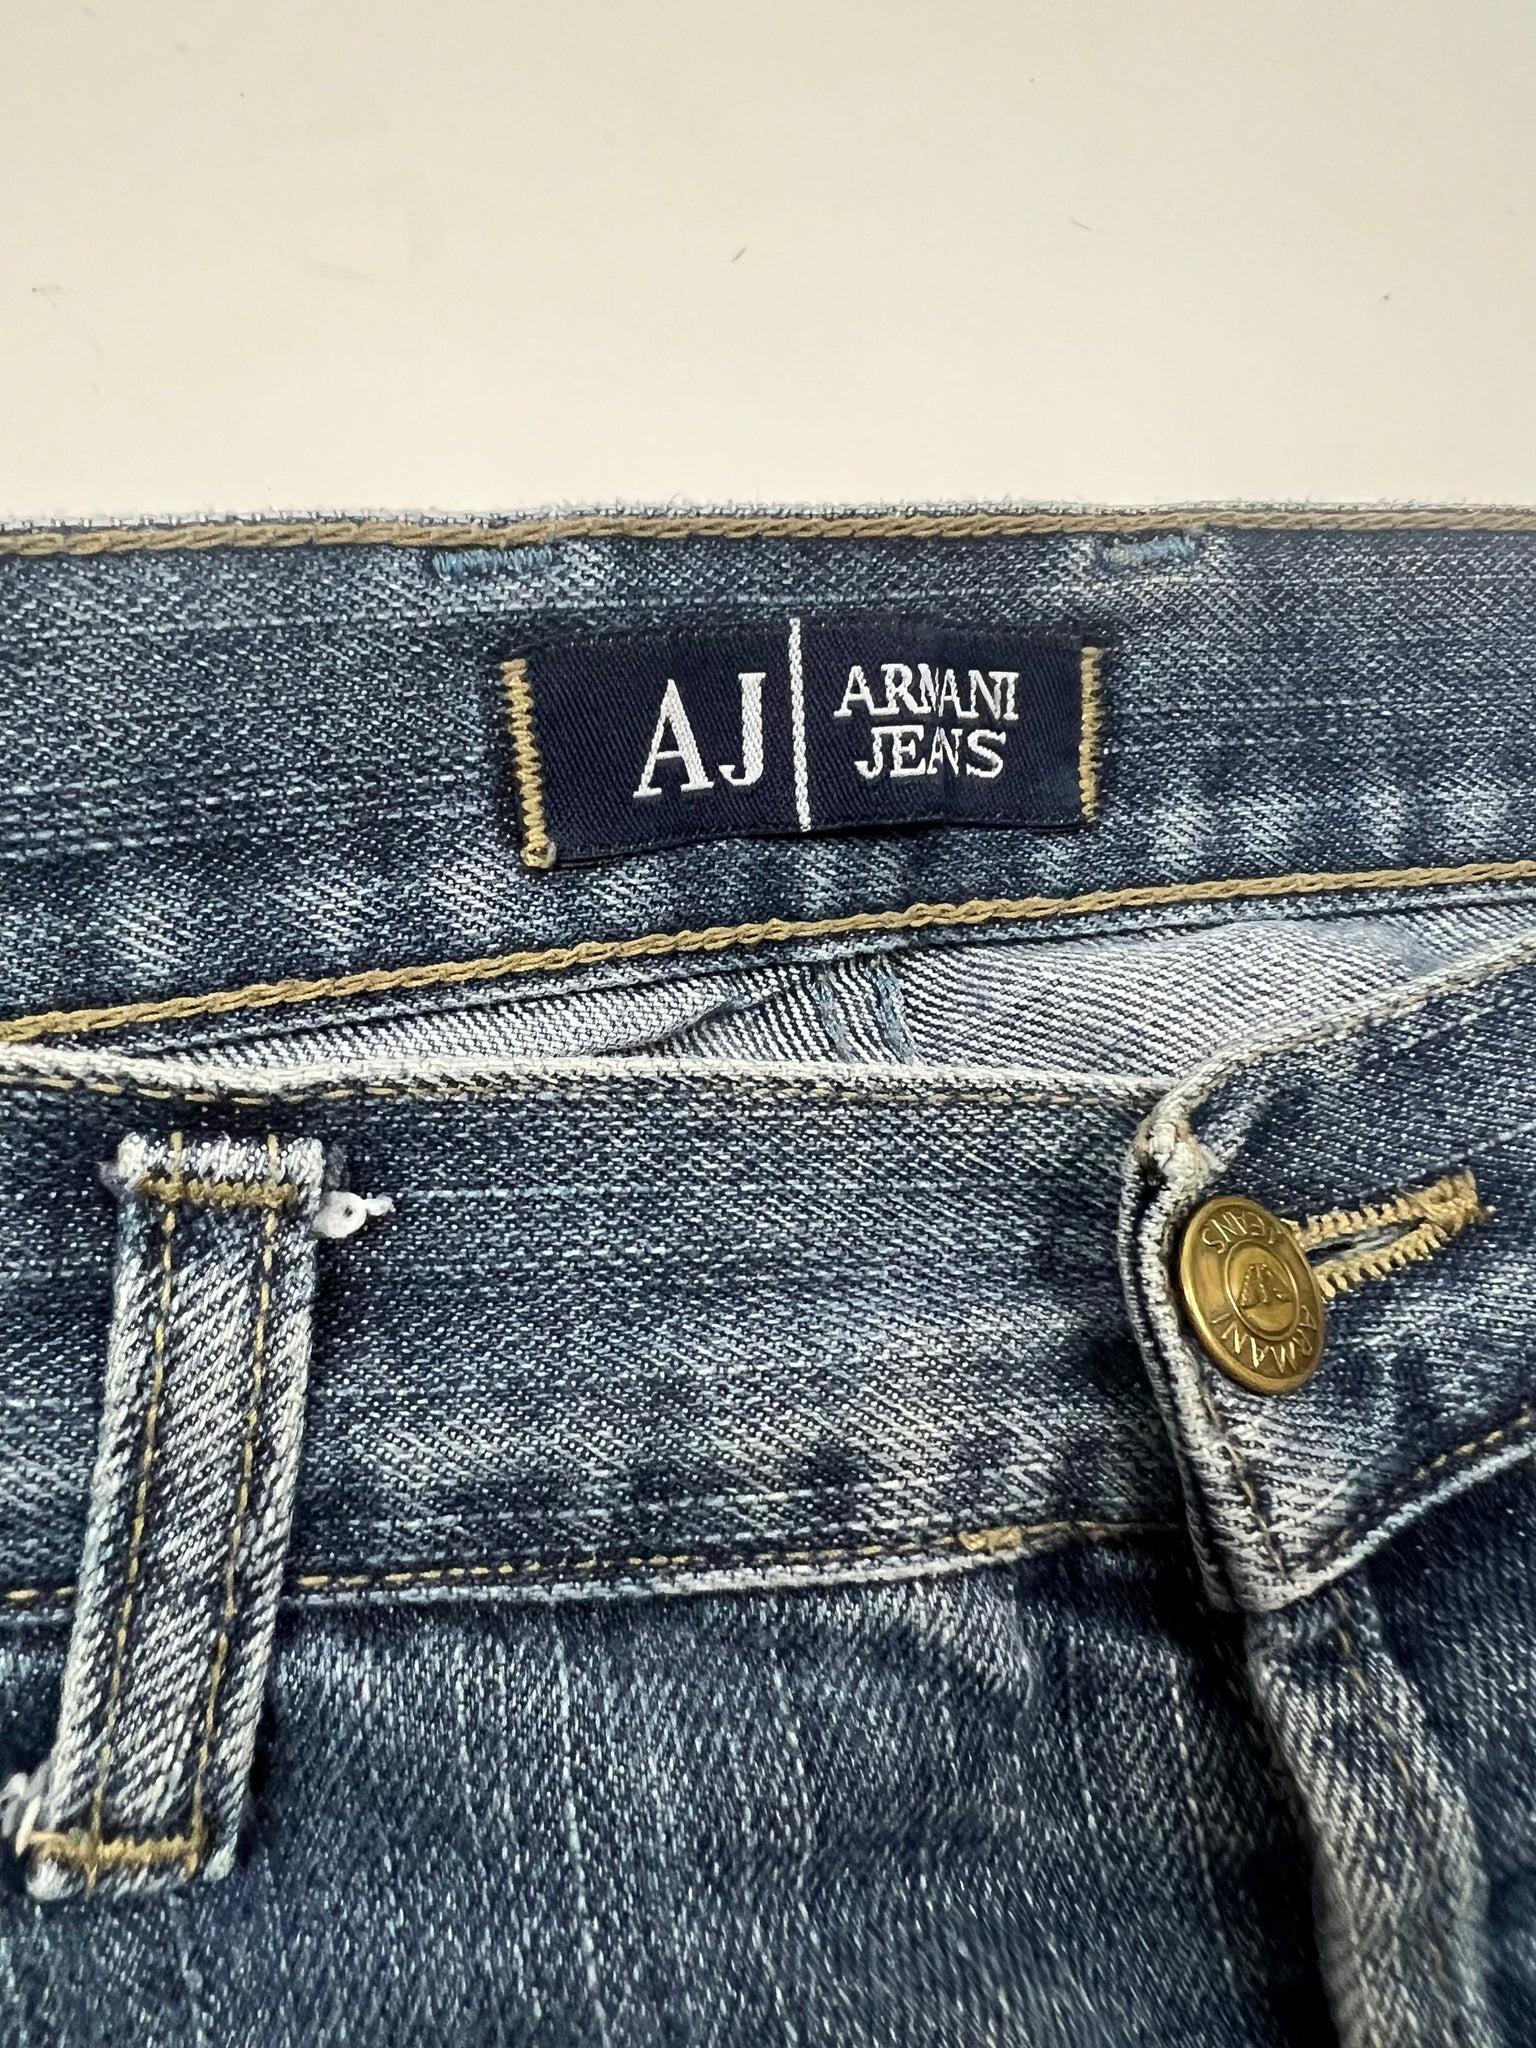 Armani Jeans (38)